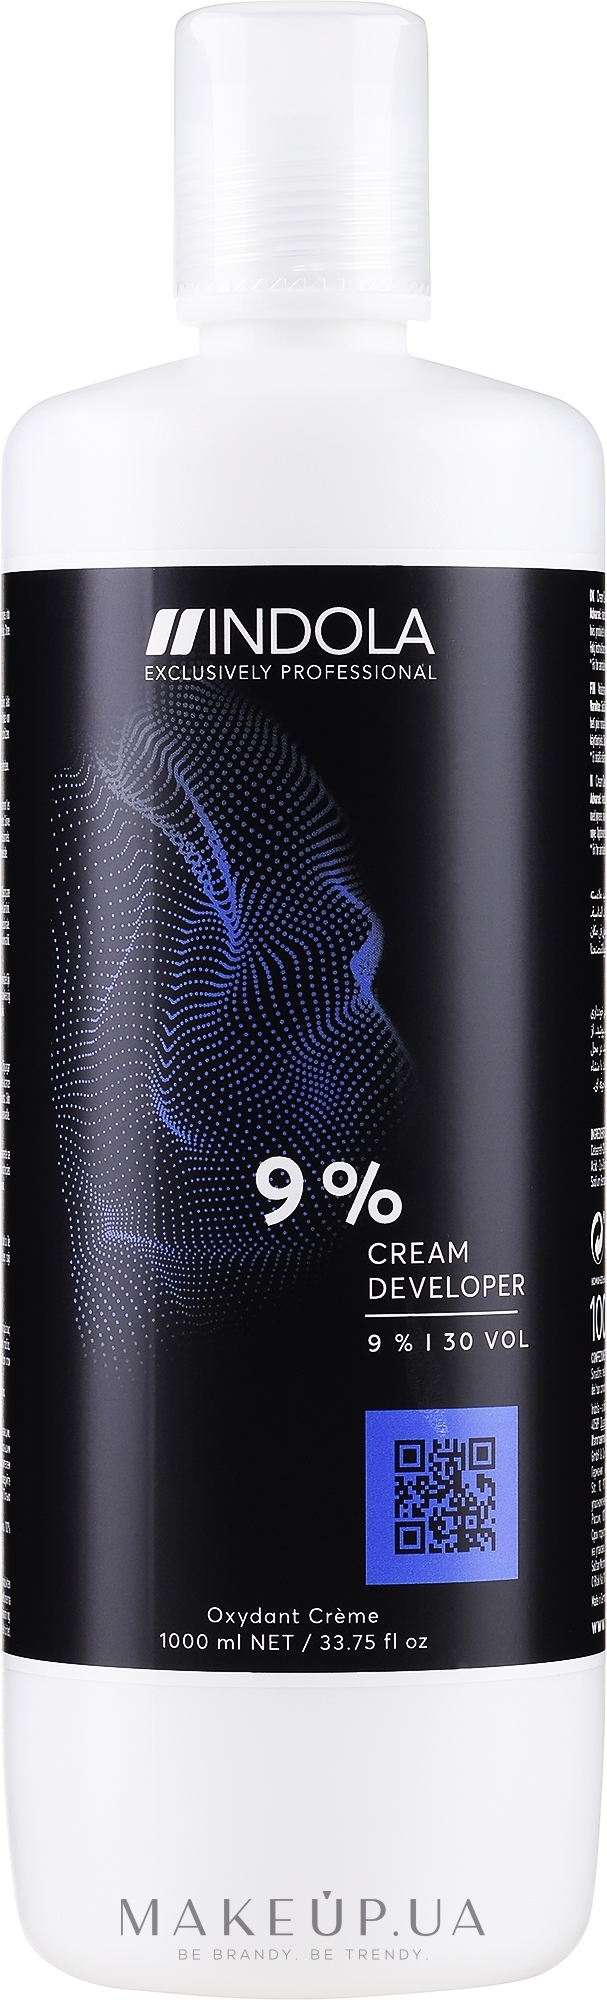 Крем-проявитель 9%-30 vol - Indola Profession Cream Developer 9%-30 vol — фото 1000ml